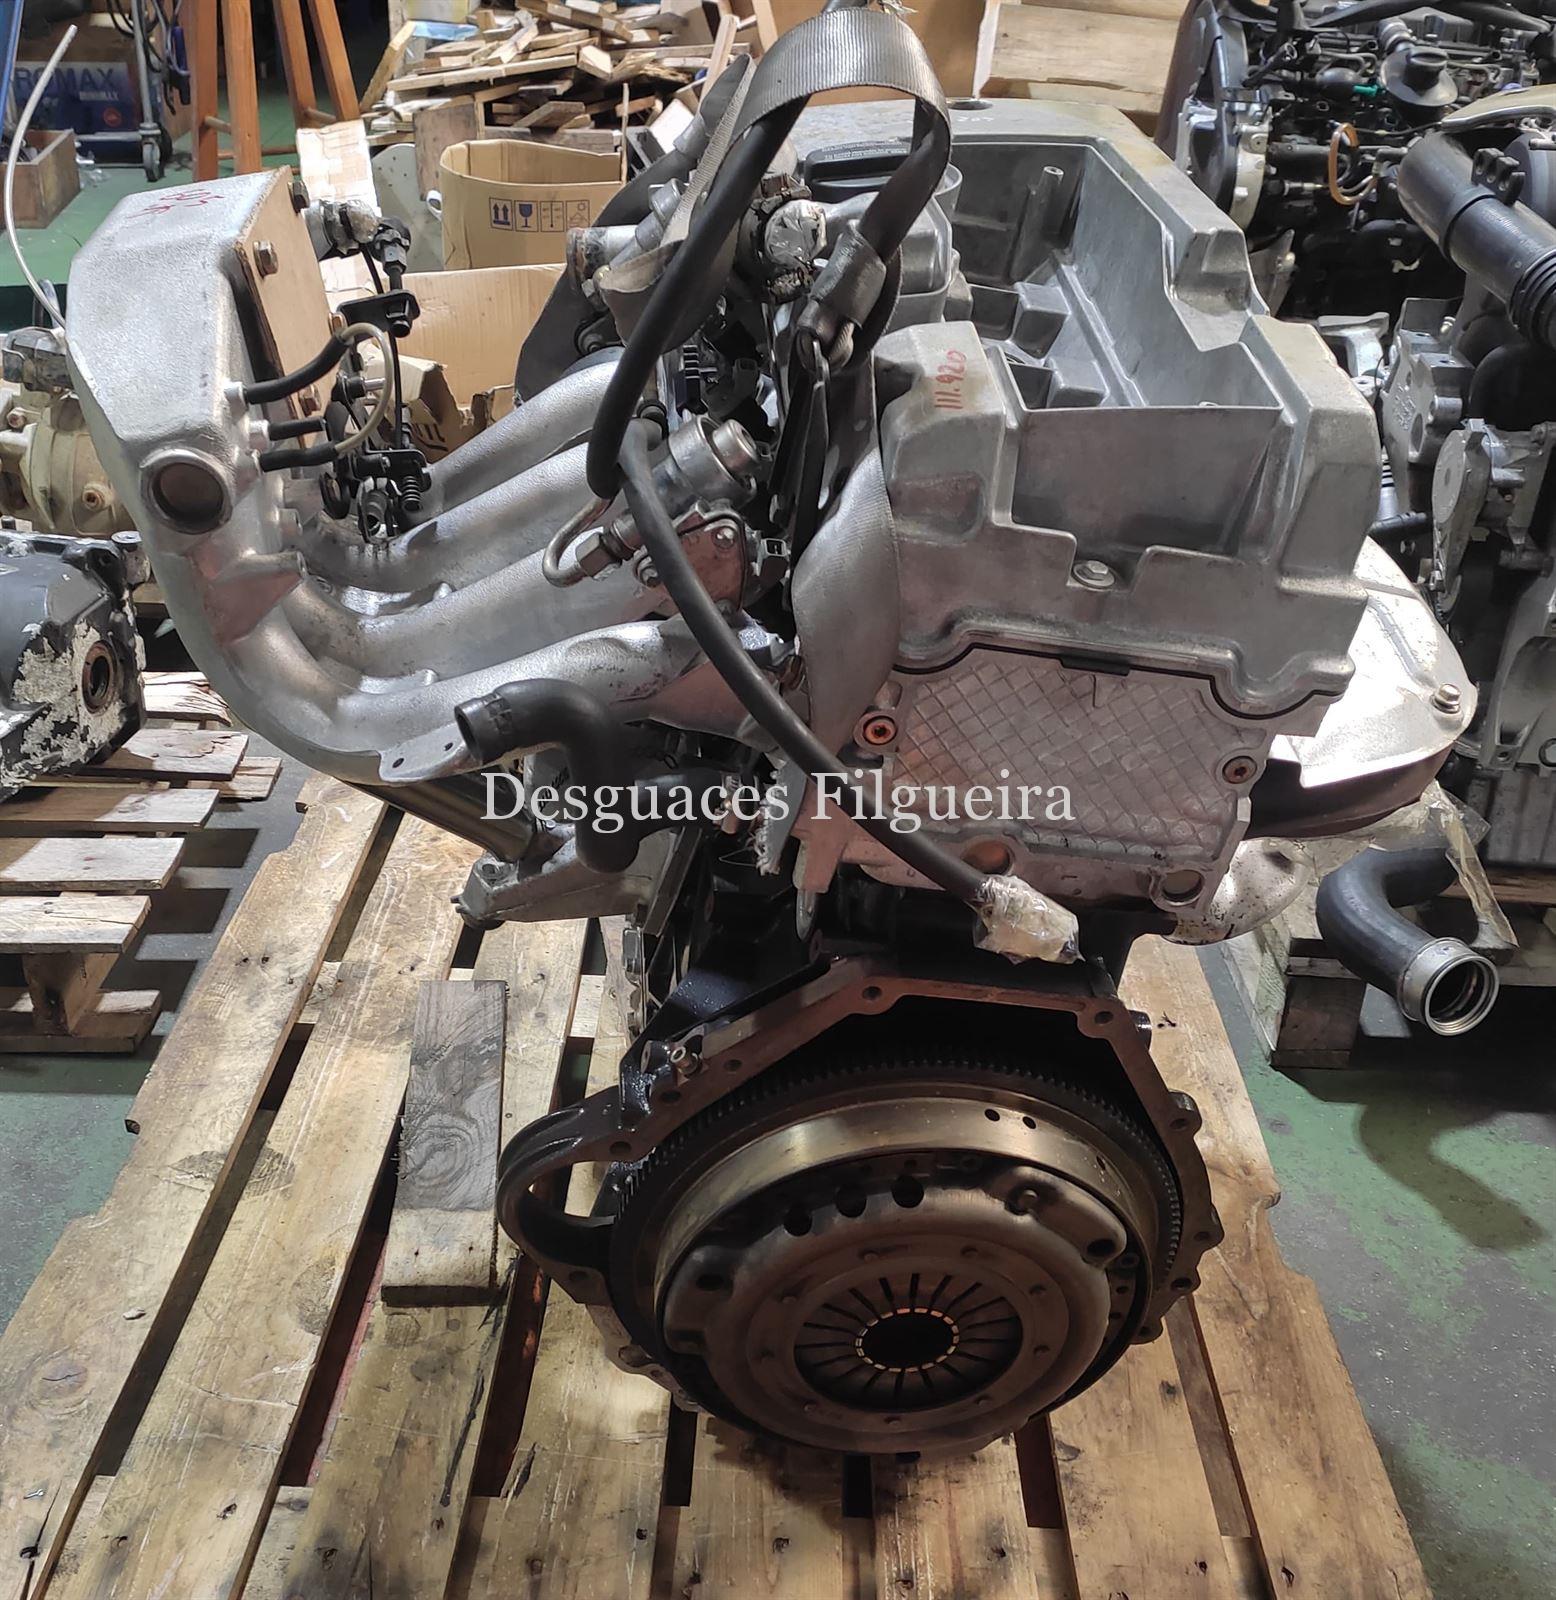 Motor completo Mercedes C180 gasolina W202 OM 111.920 - Imagen 5